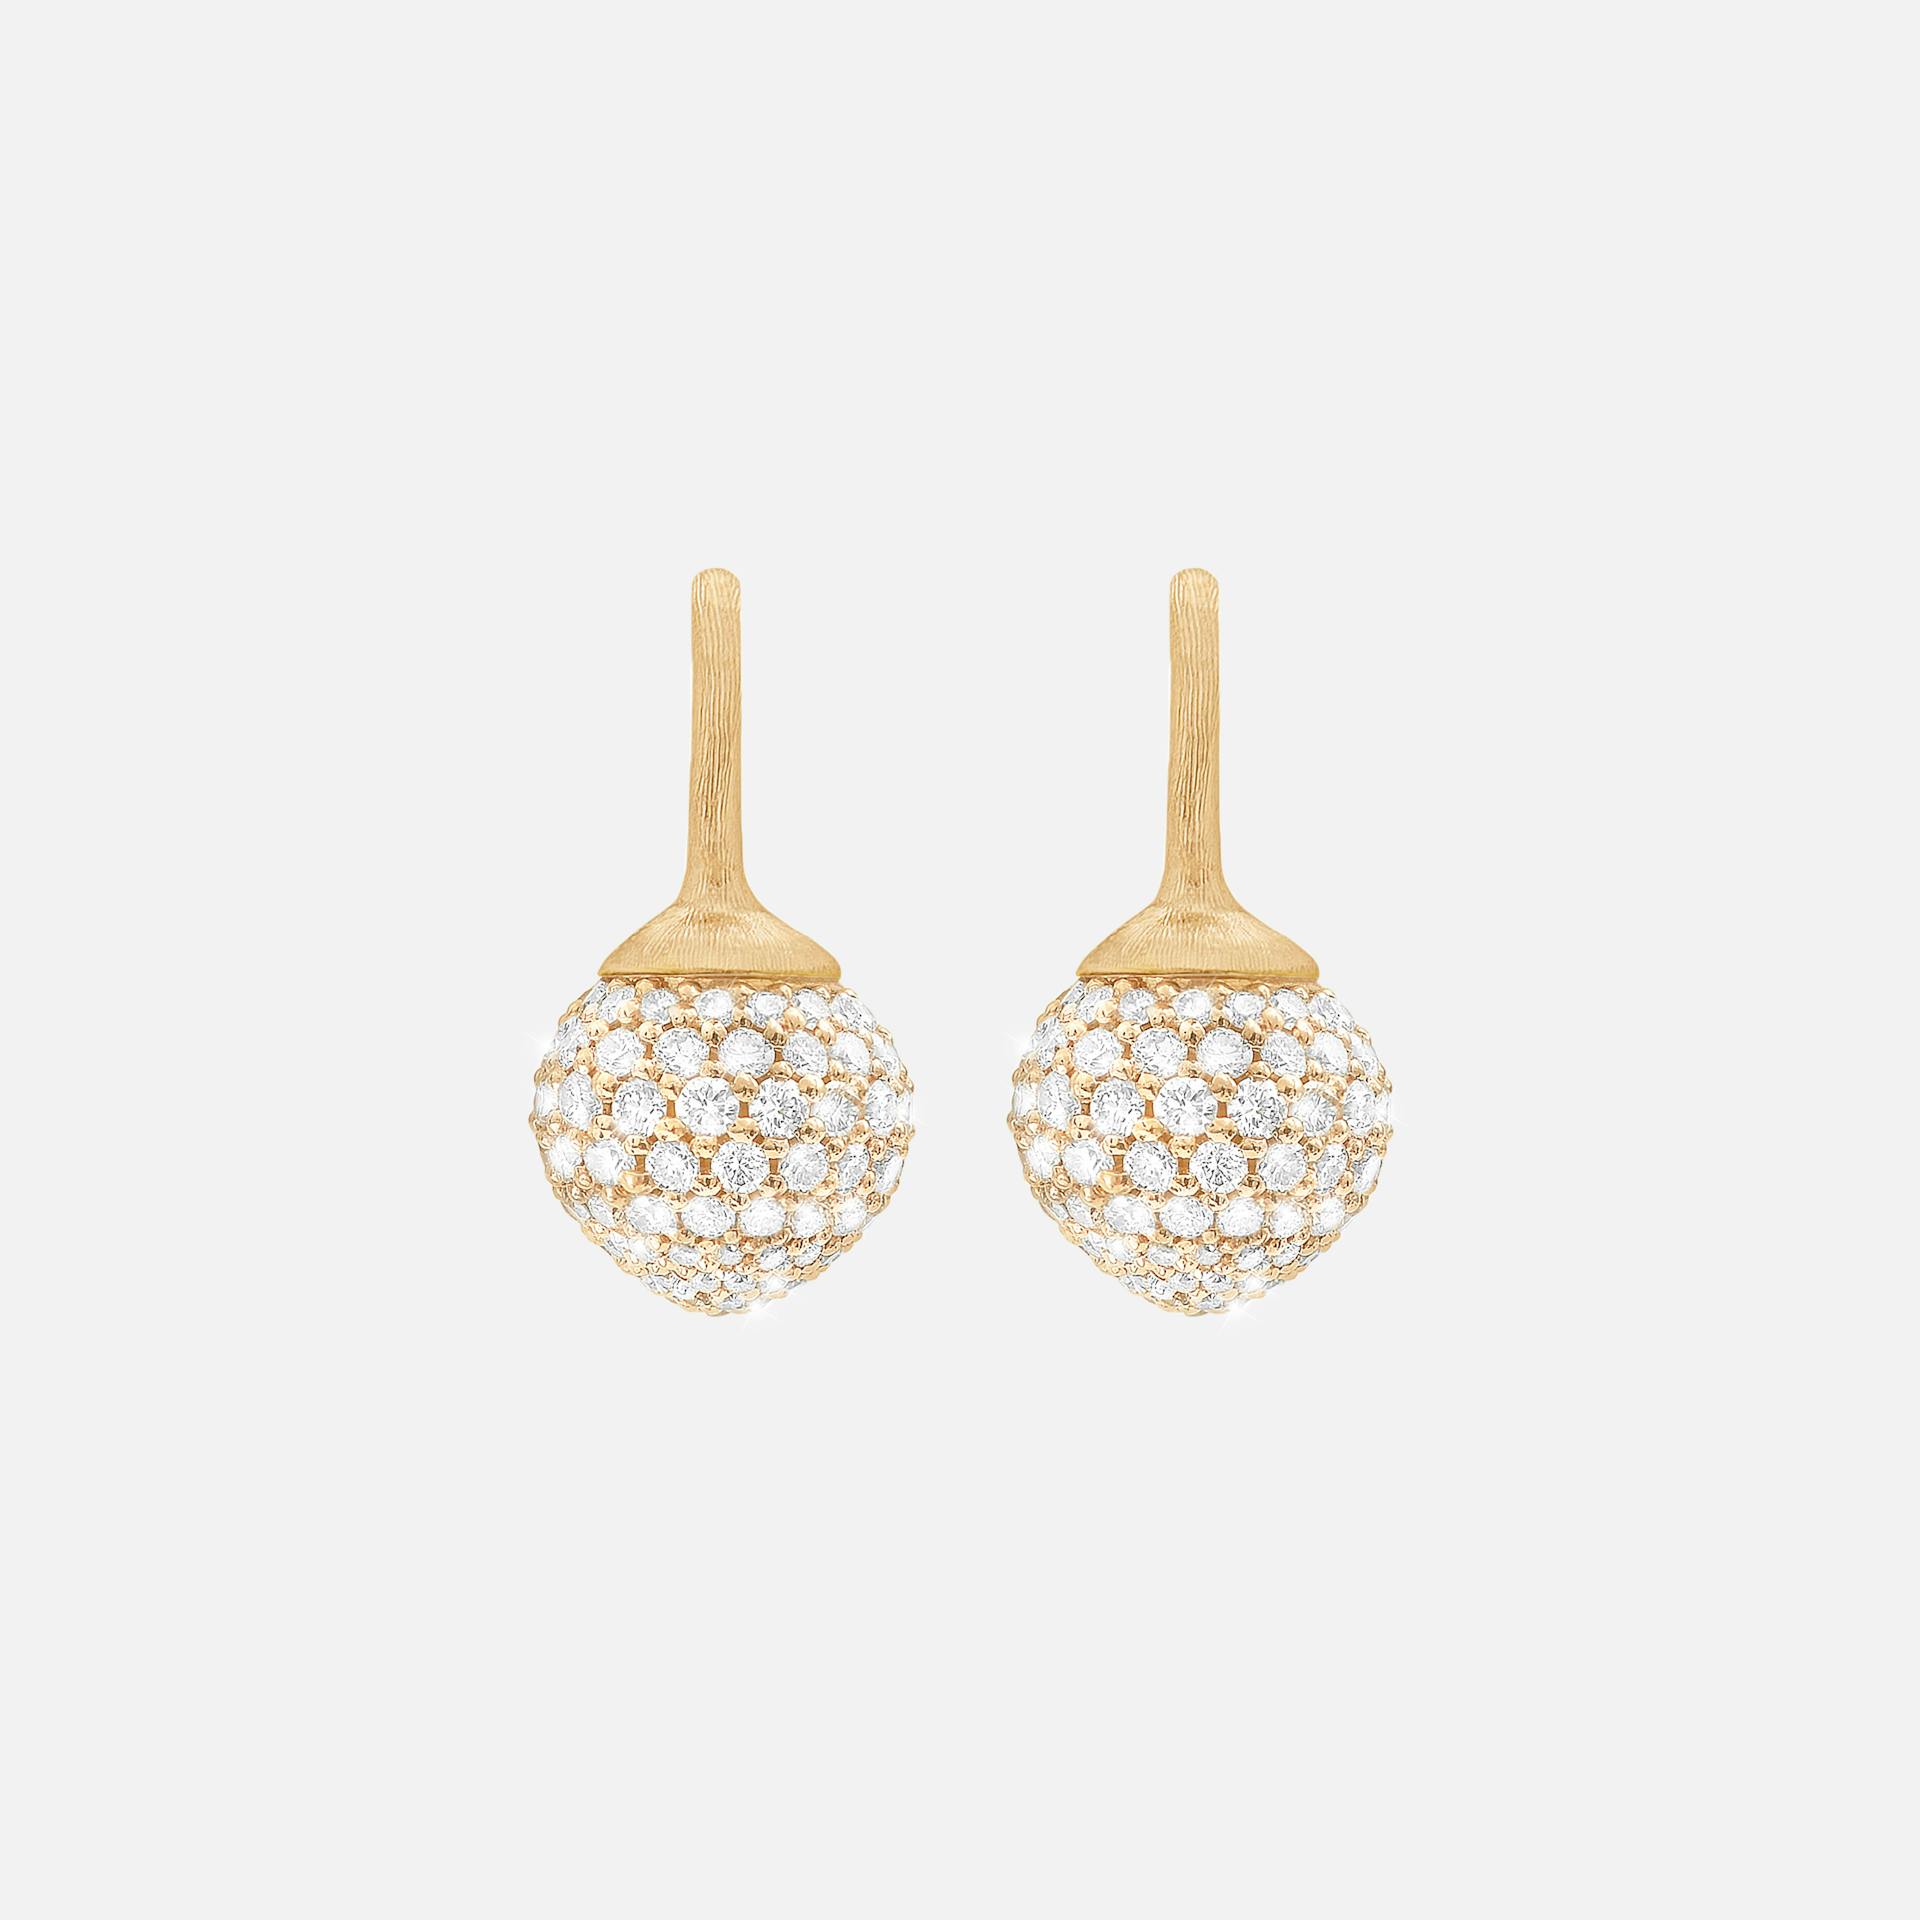 Dew drops earrings 18k gold with diamonds pavé 2.74 ct. TW.VS